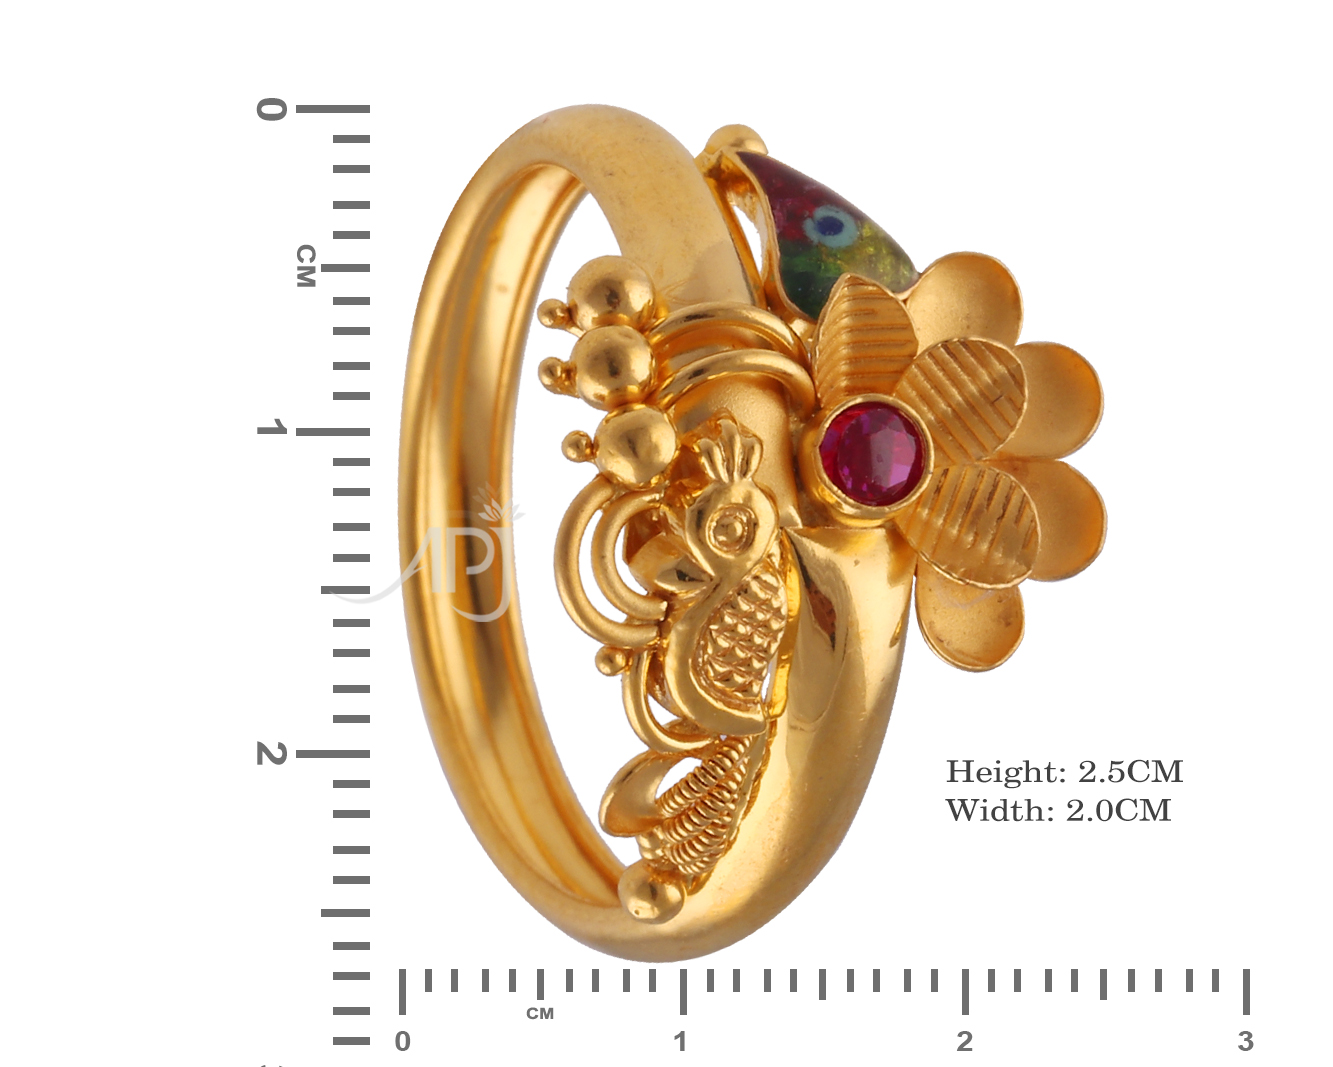 Light weight vanki rings |pelli rings|pradanam rings|పెళ్లి రింగ్స్| |  Vanki ring, Jewelry collection, Gold design